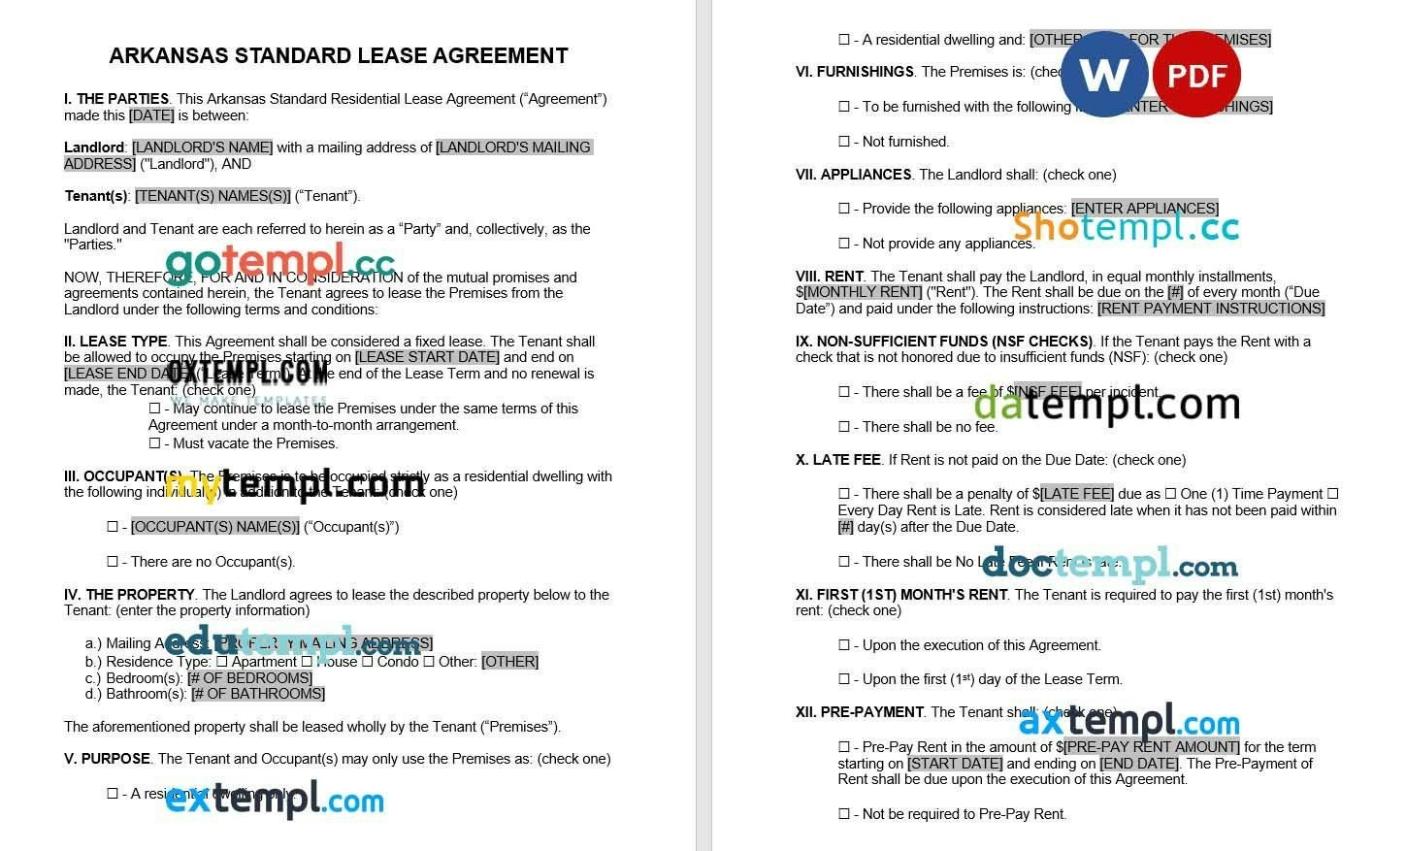 Arkansas Standard Lease Agreement Word example, fully editable